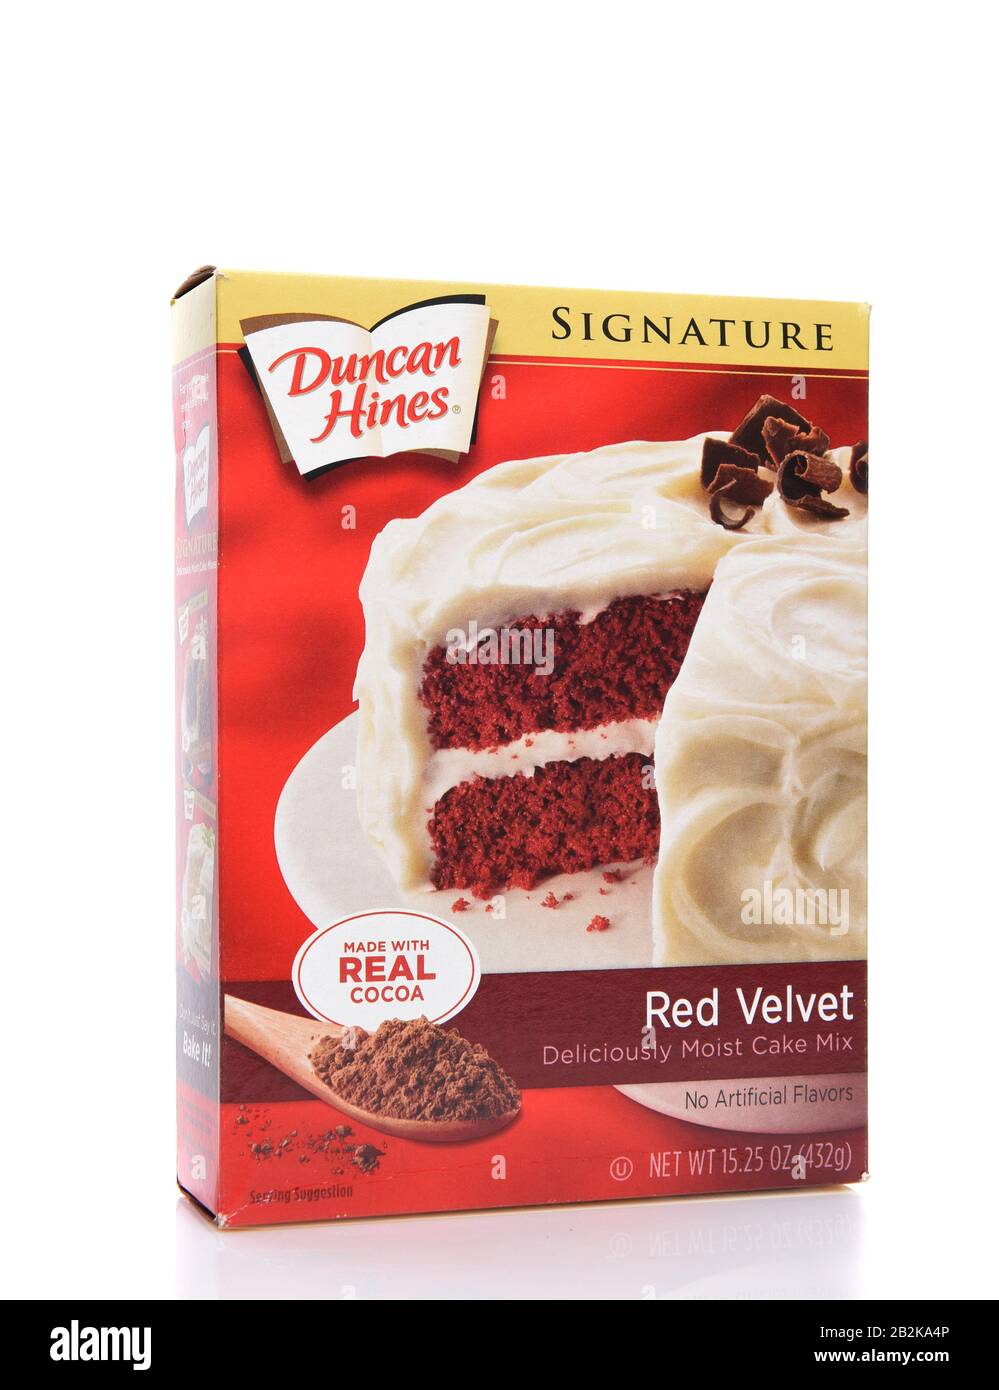 IRVINE, CALIFORNIA - AUGUST 14, 2019: A box of Duncan Hines Red Velvet Cake Mix. Stock Photo